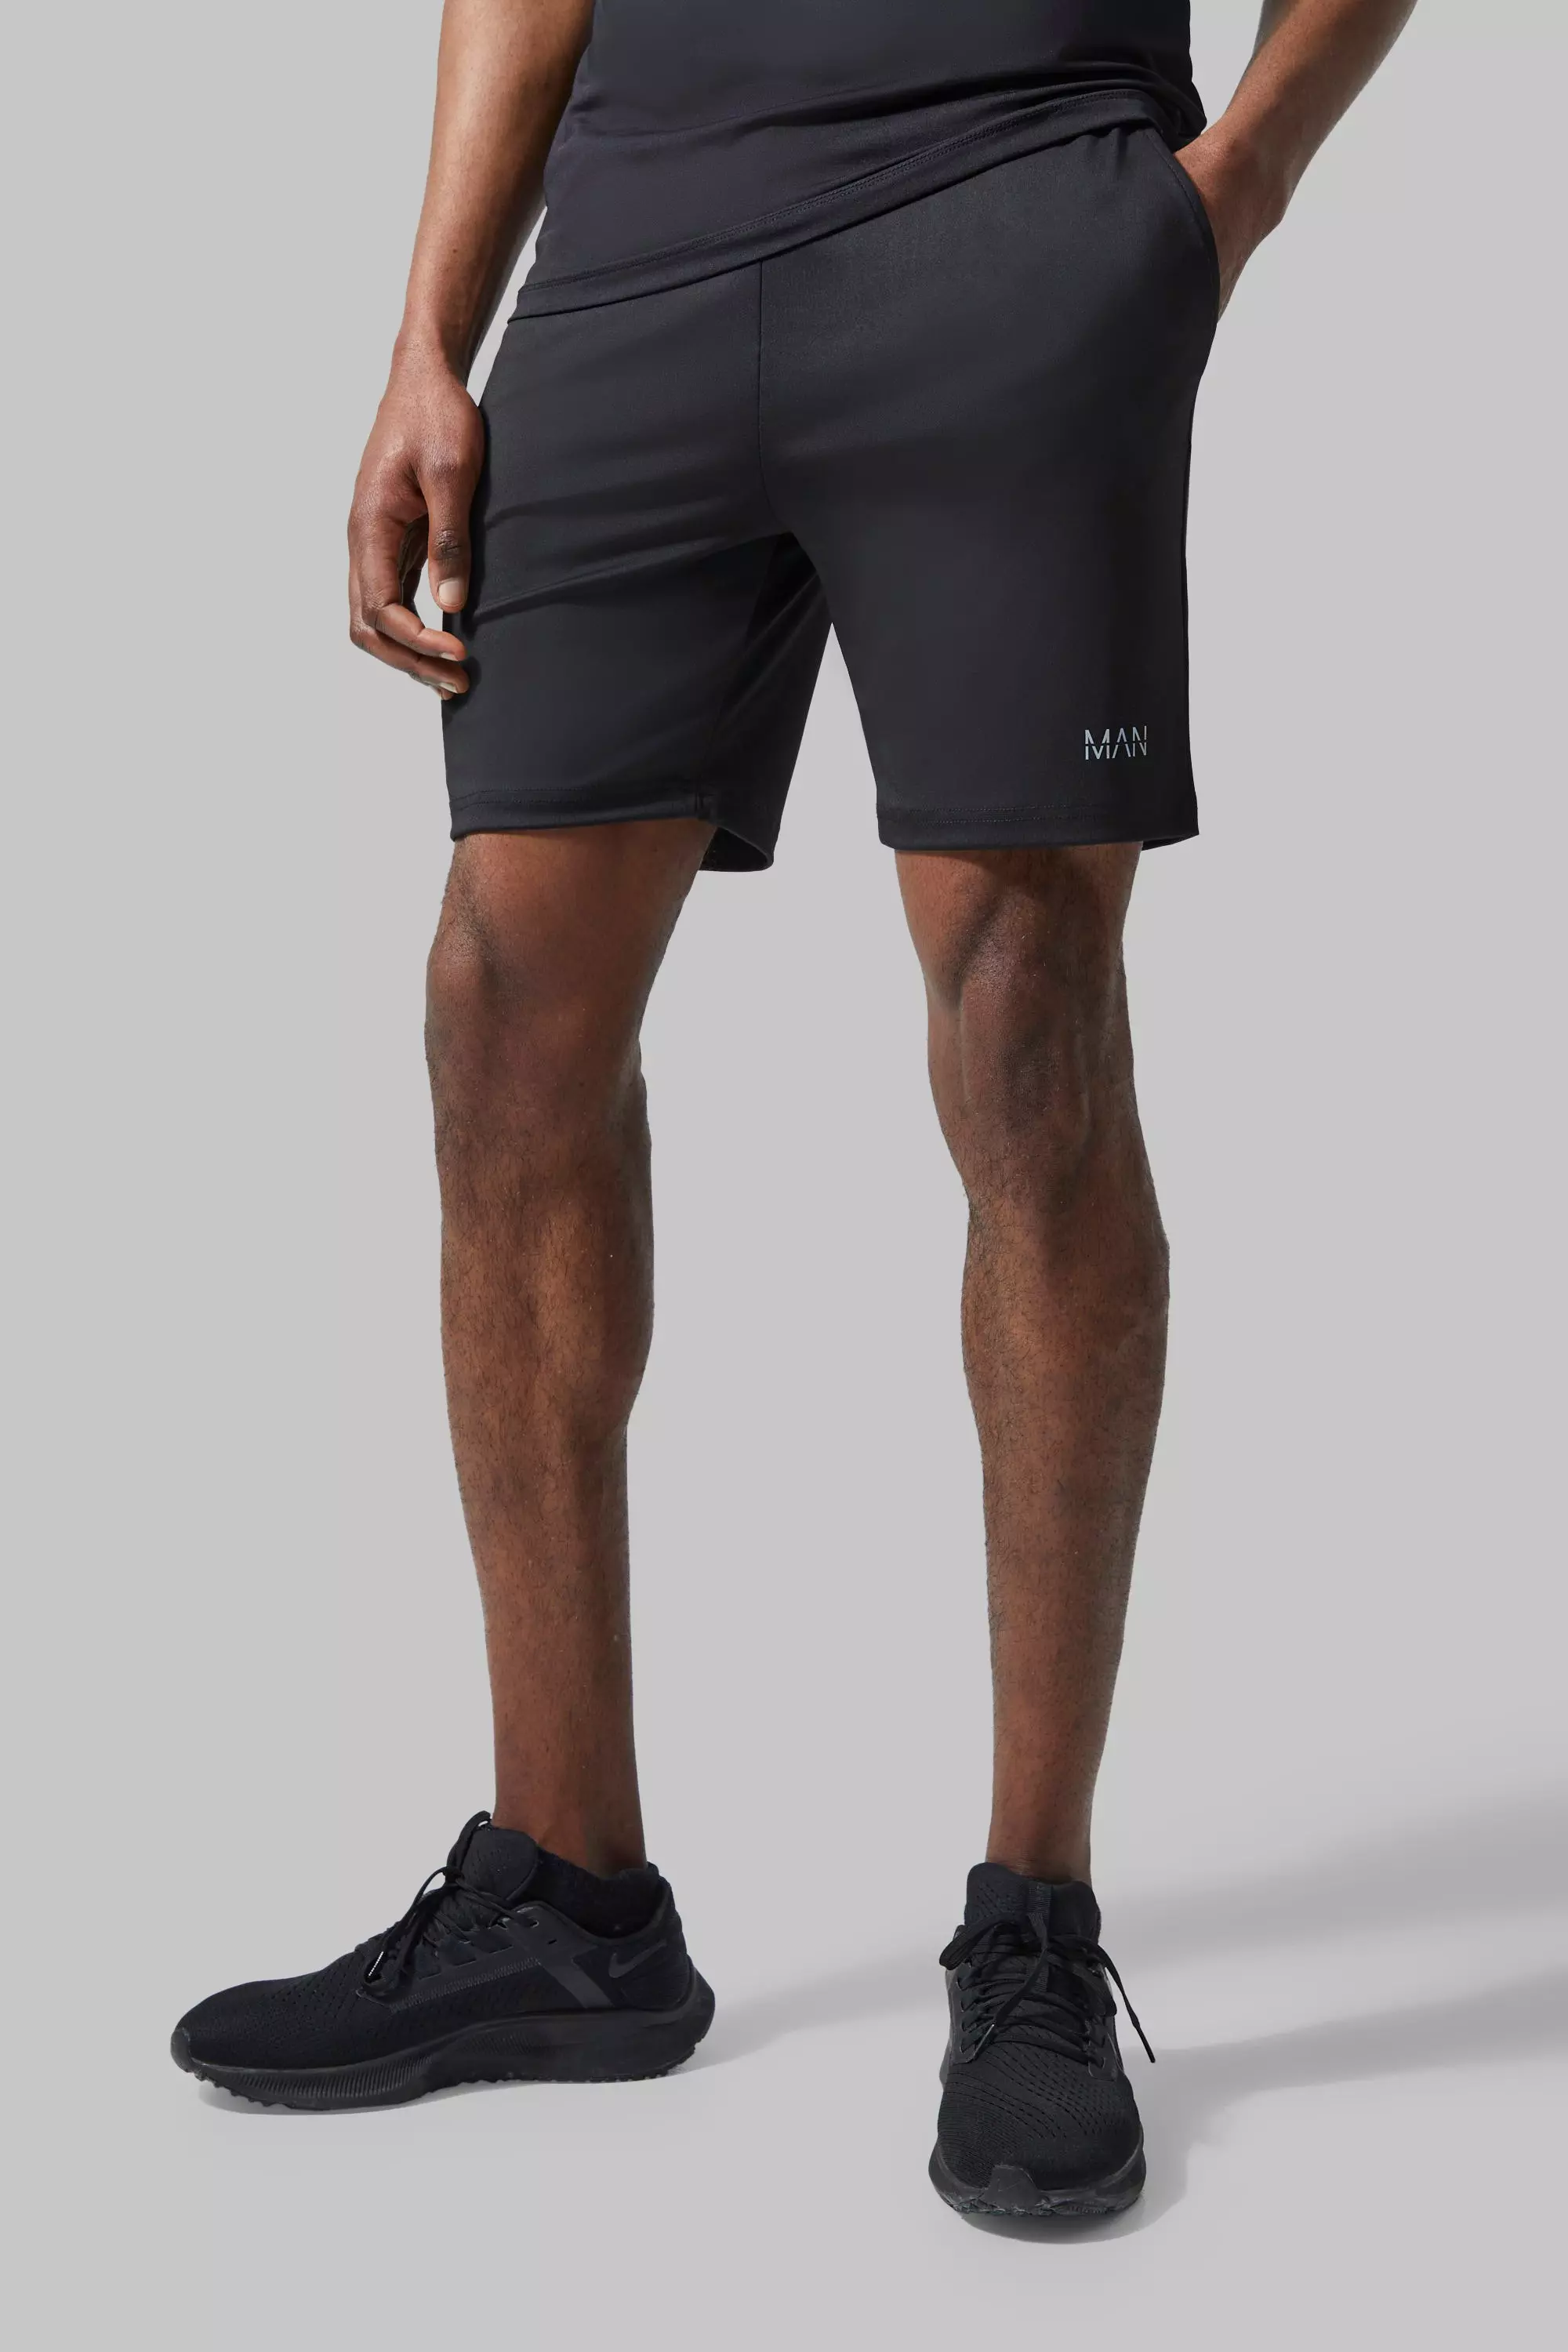 Man Active Gym Performance Shorts Black